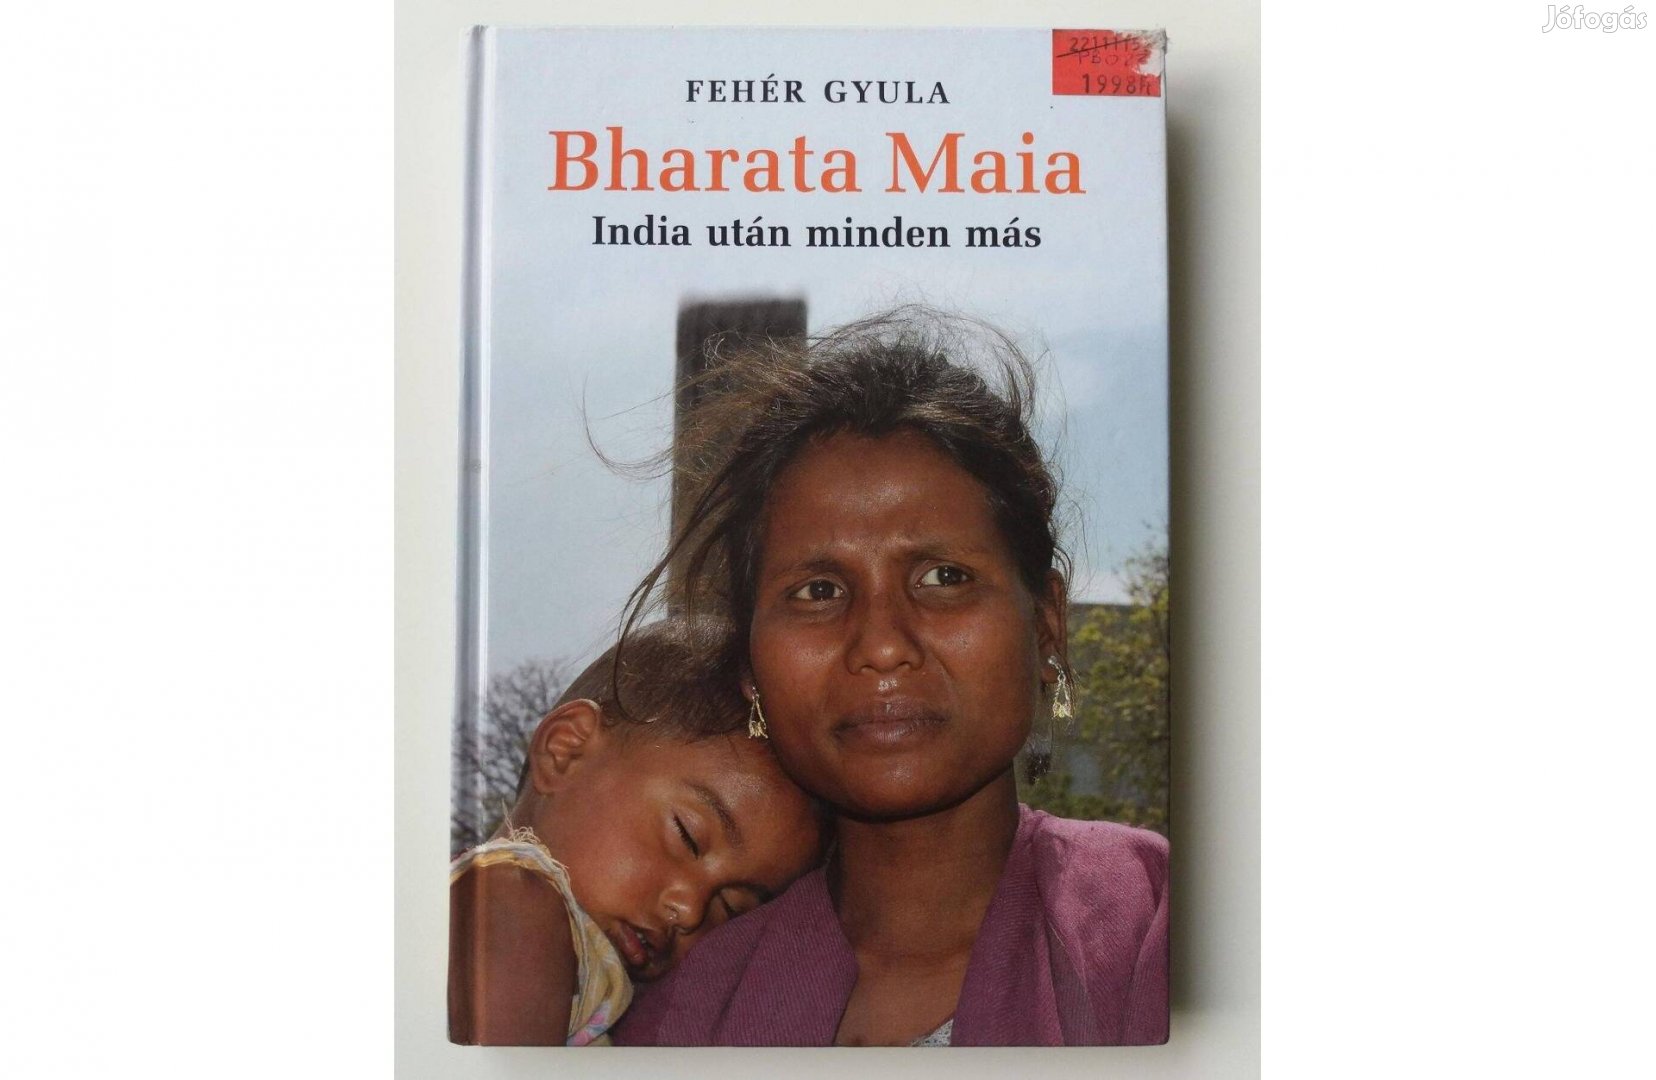 Fehér Gyula: Bharata Maia (India után minden más)